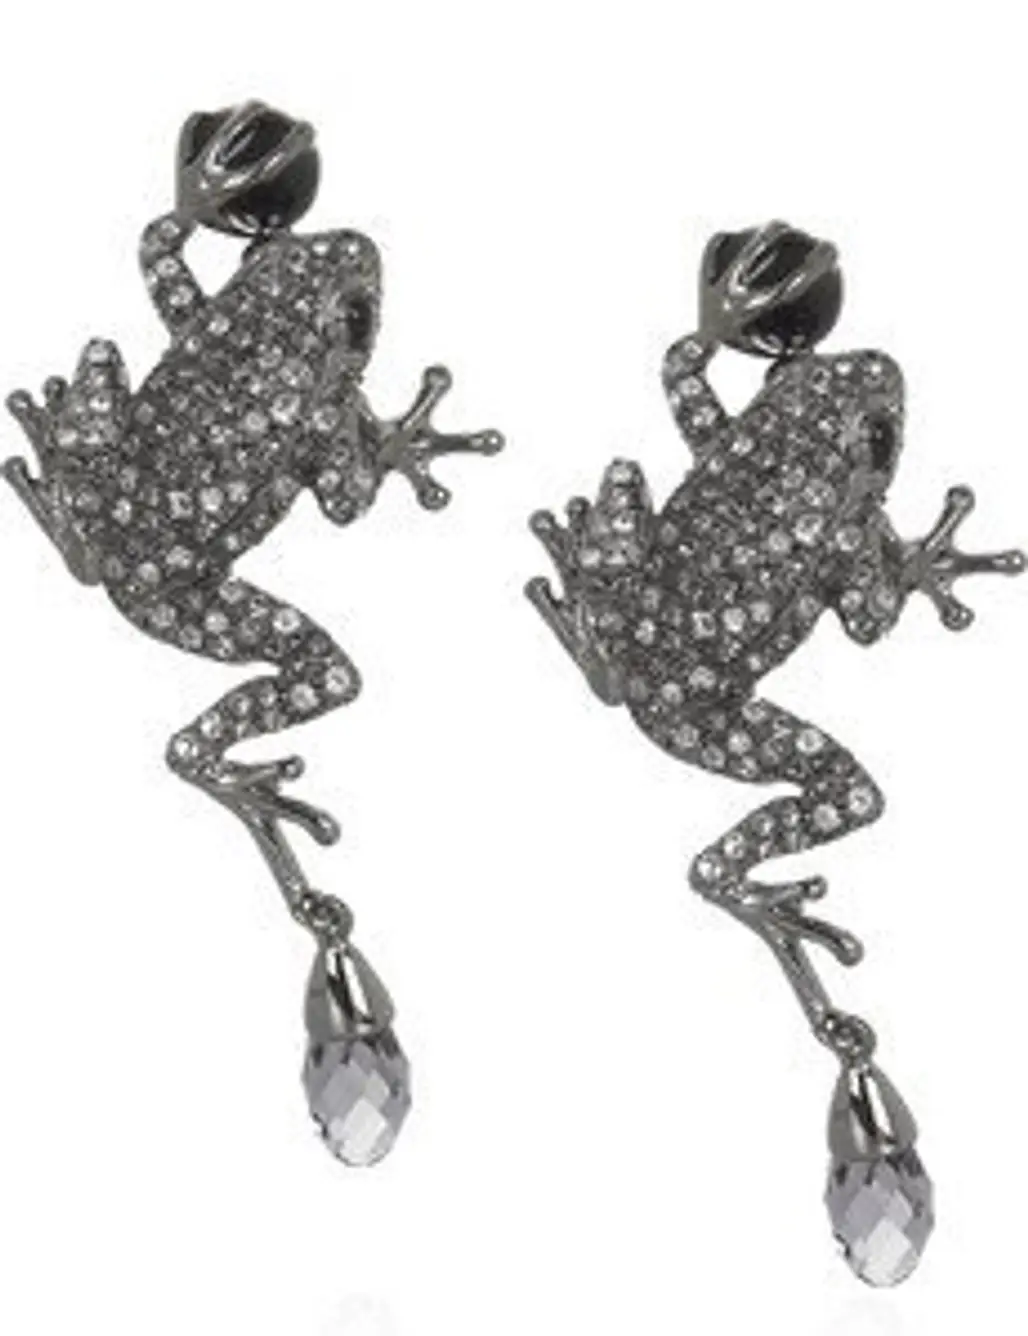 1. Roberto Cavalli Swarovski Frog Earrings